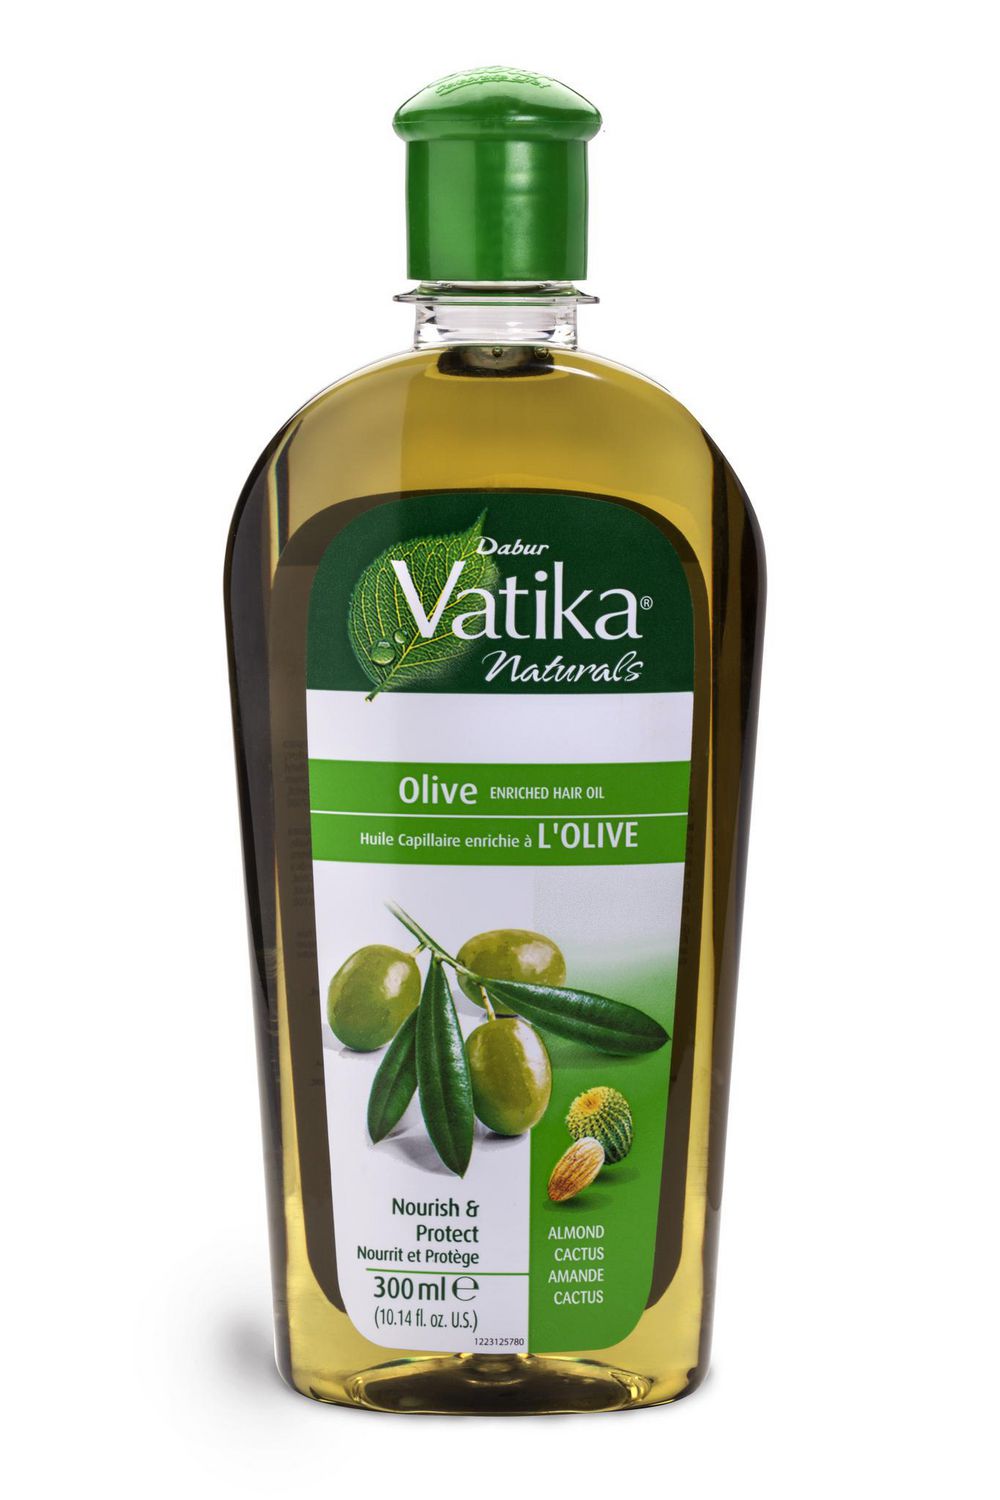 Dabur Vatika Hair Oil Olive Enriched | Walmart Canada